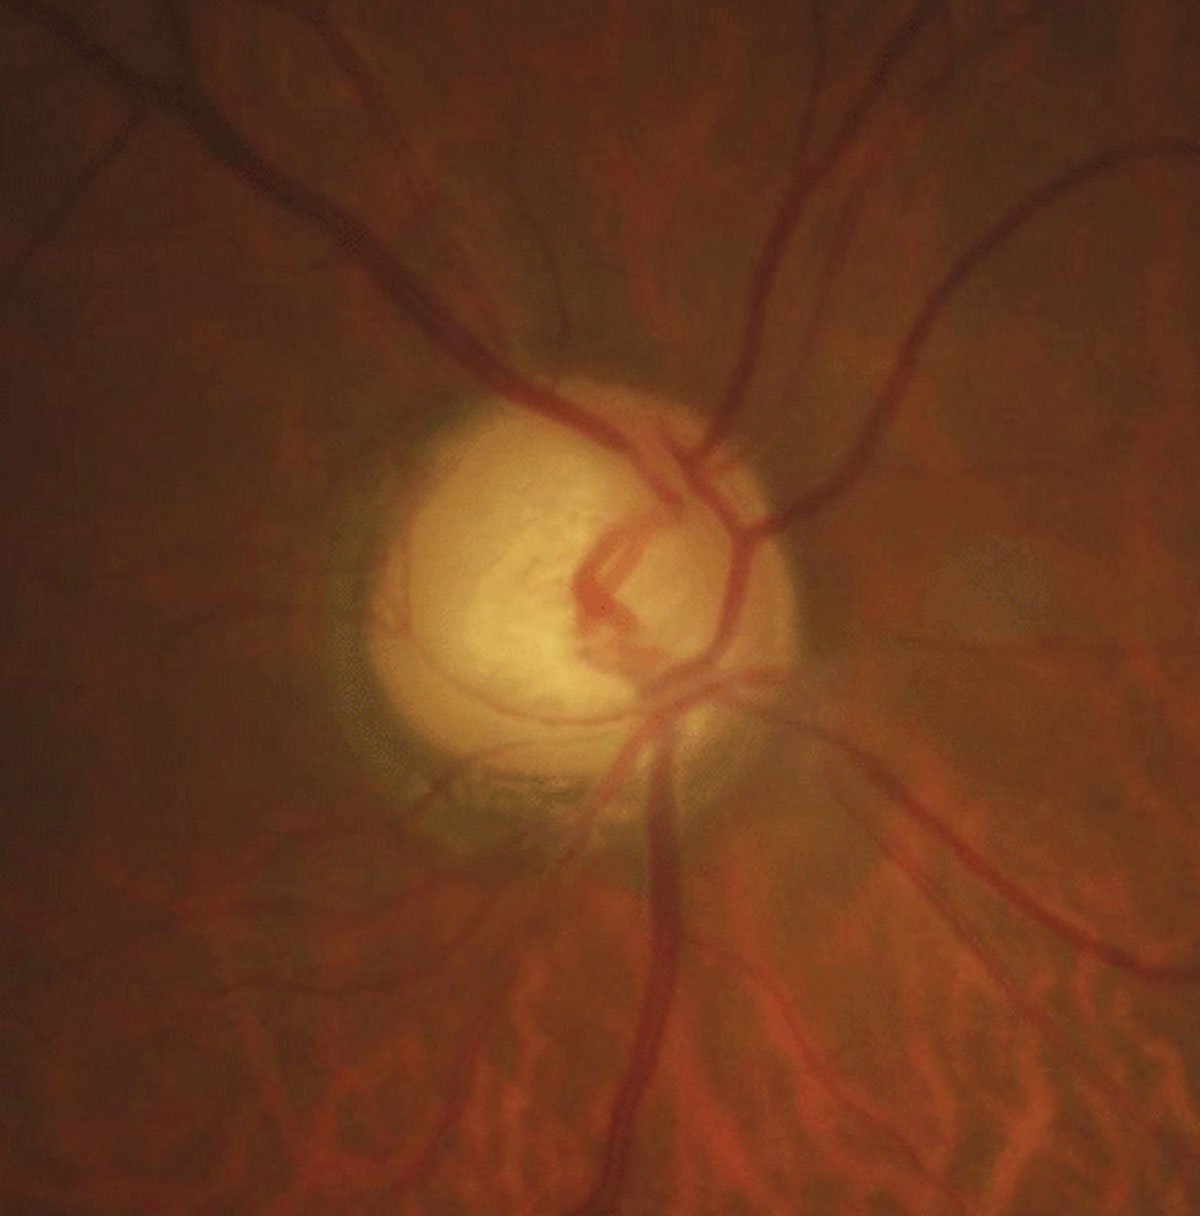 Chromatic pupillometry helps identify abnormal light responses in glaucoma. Photo: Justin Cole, OD, and Jarett Mazzarella, OD.